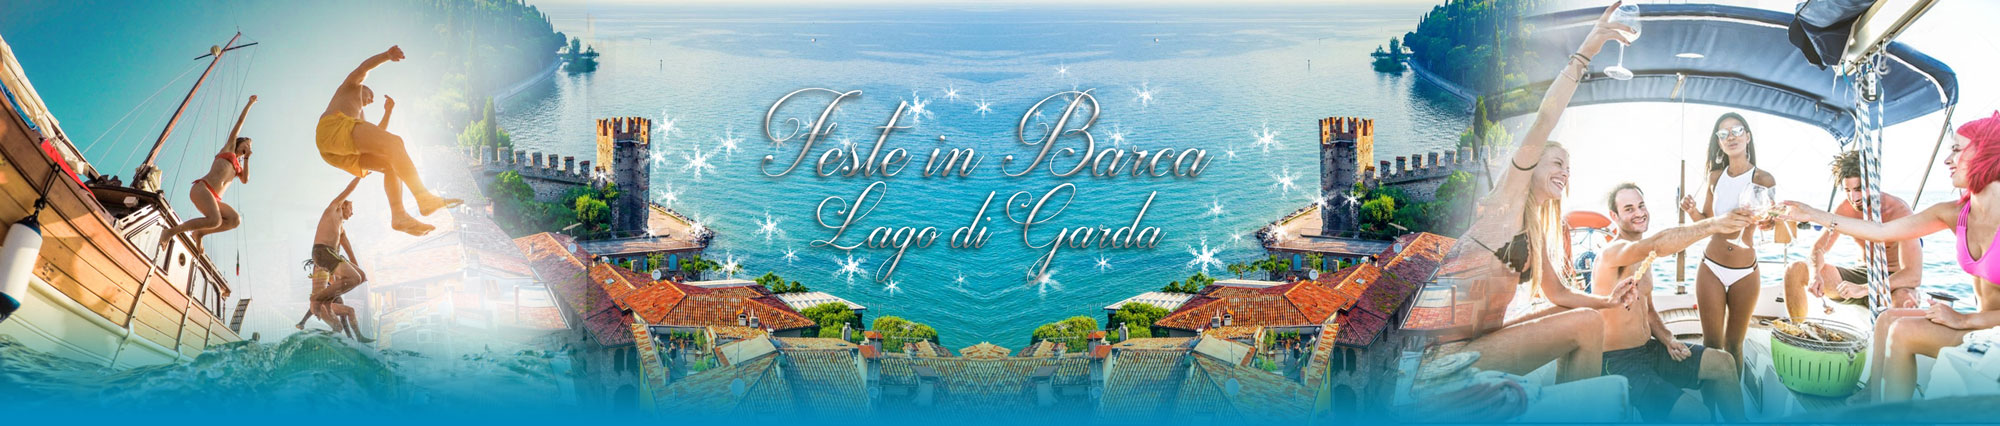 Feste in barca Lago di Garda